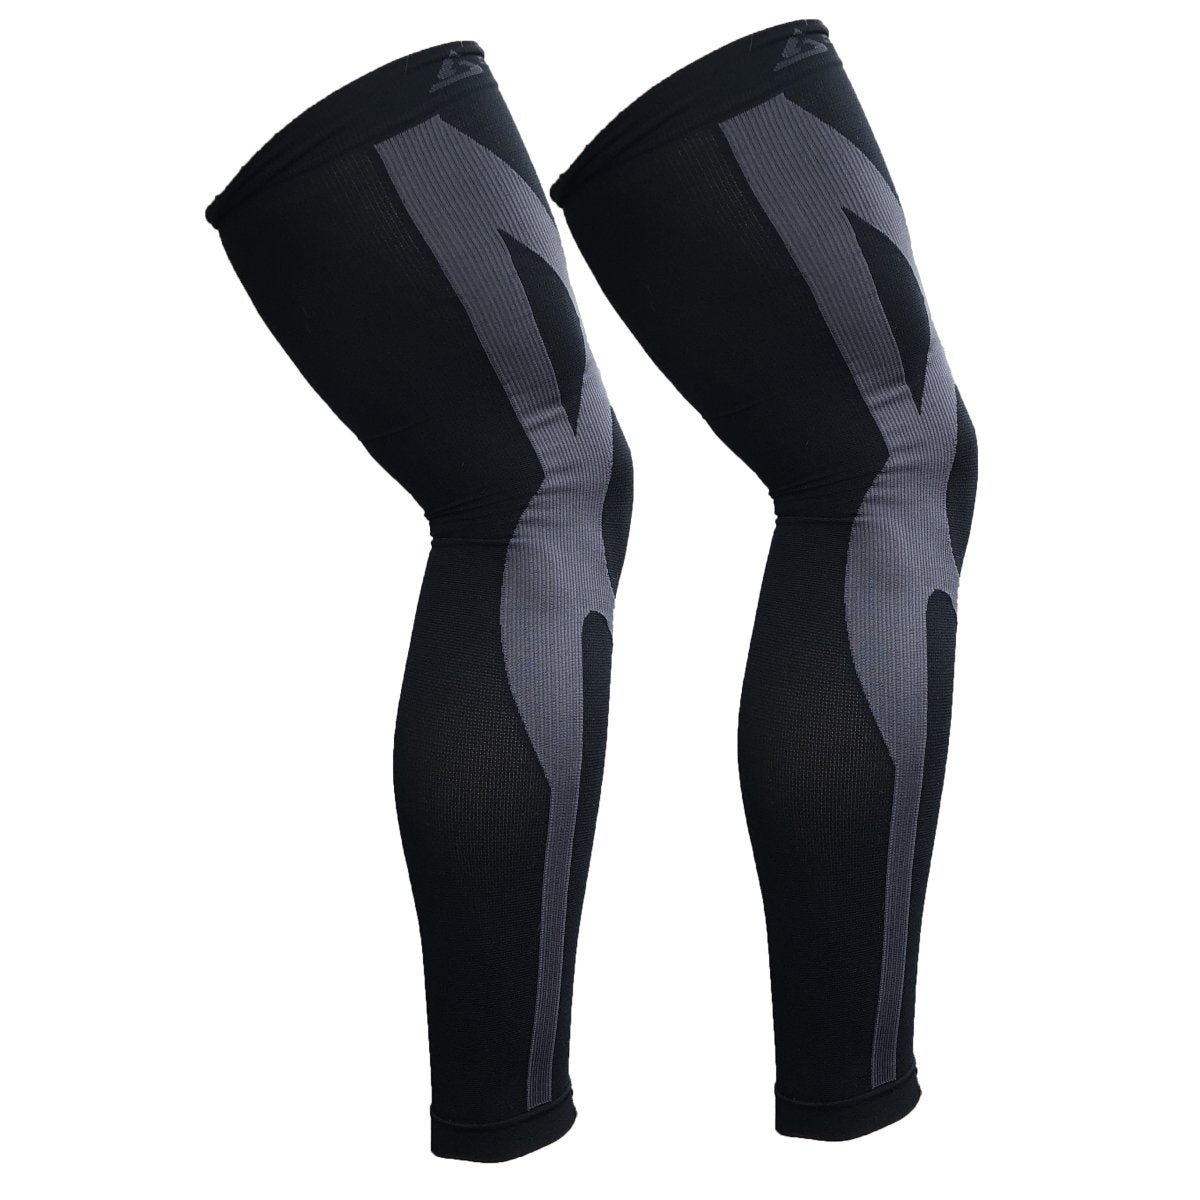 Leg | Enhanced Graduated Compression Sleeve - Pair